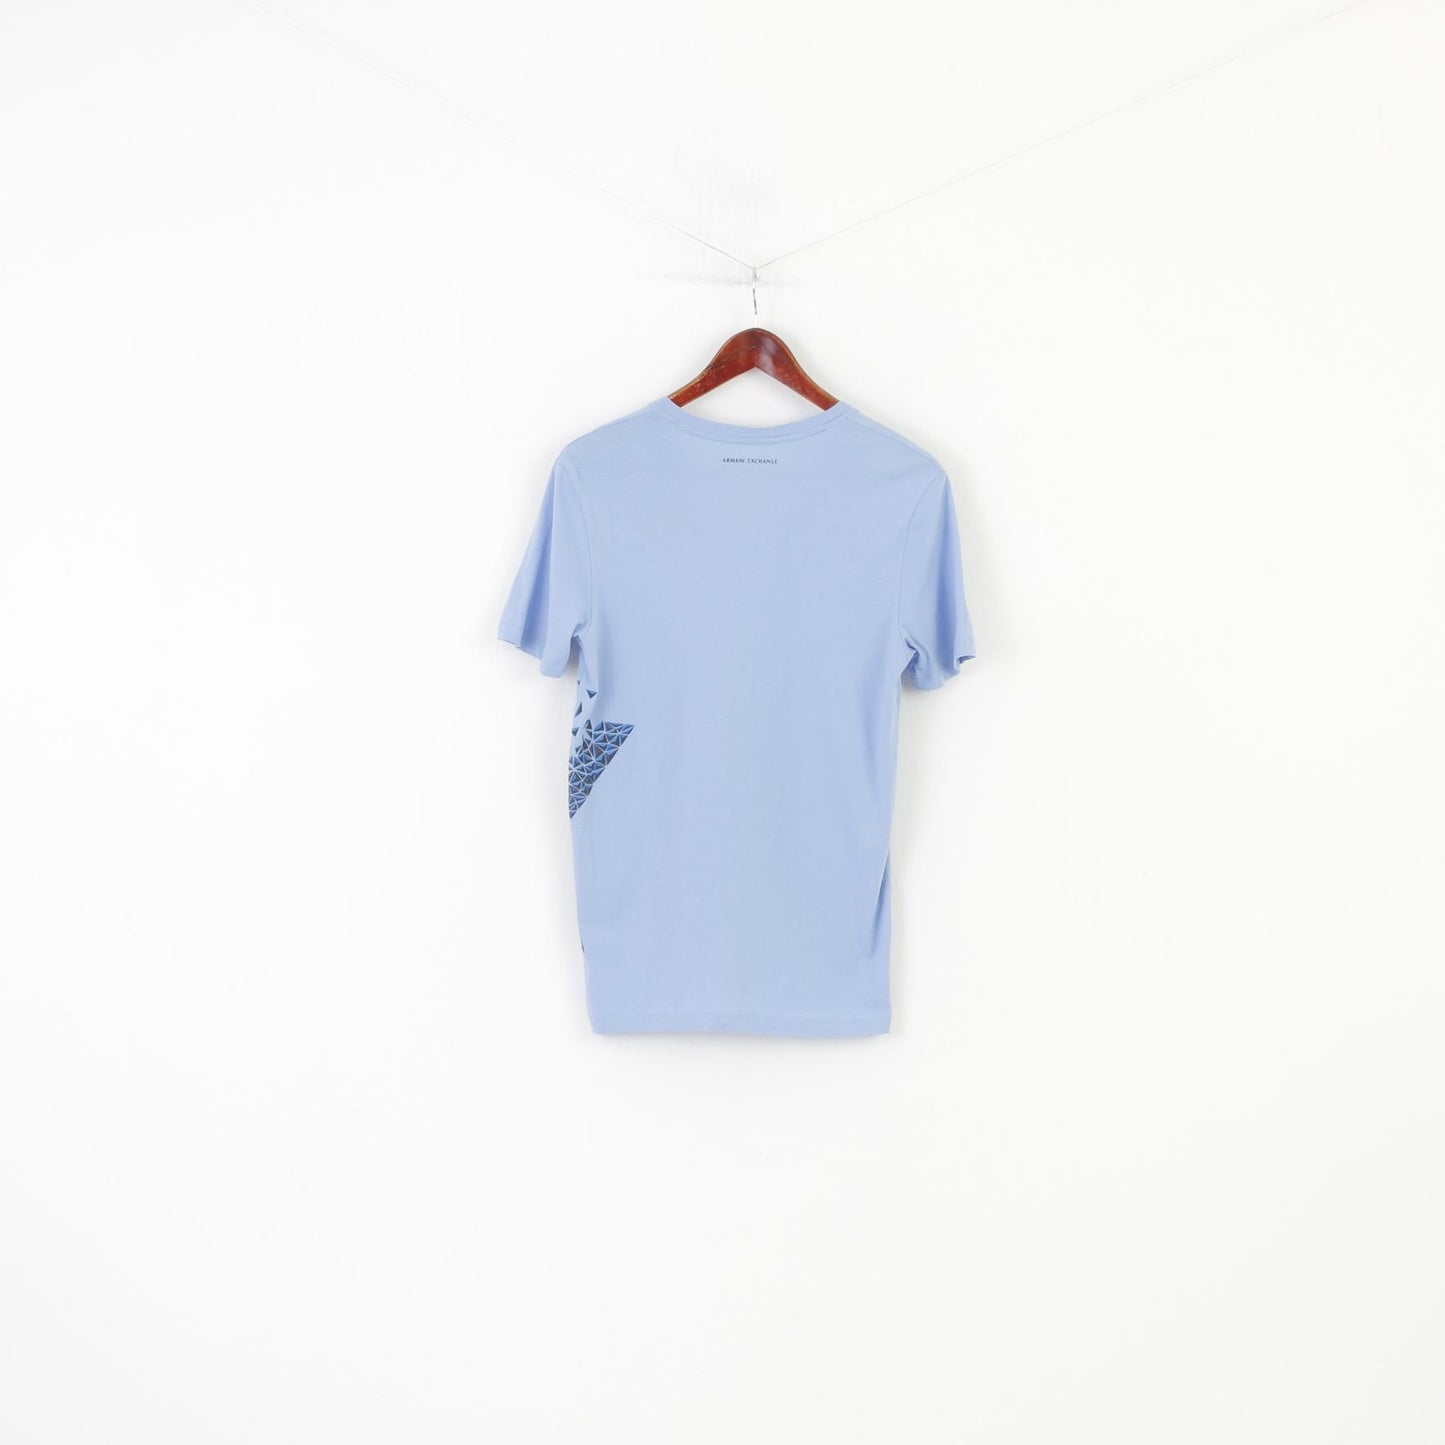 Armani Exchange Woman S T-Shirt V Neck Blue Cotton Short Sleeve Top